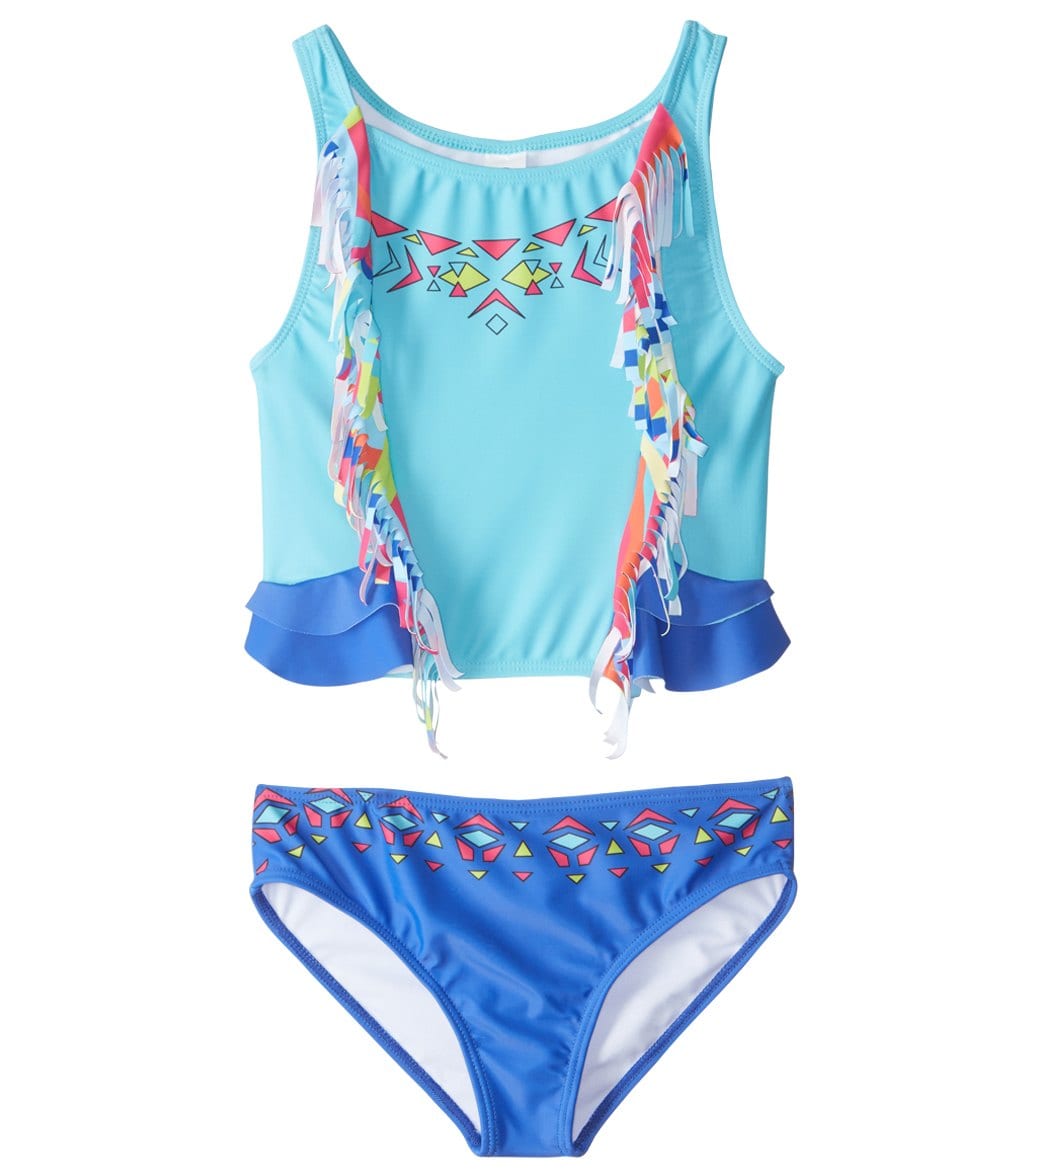 Limeapple Upf 50+ Cali Two Piece Bikini Set 6 Months-4T - Turquoise 18-24 Months Nylon/Spandex - Swimoutlet.com